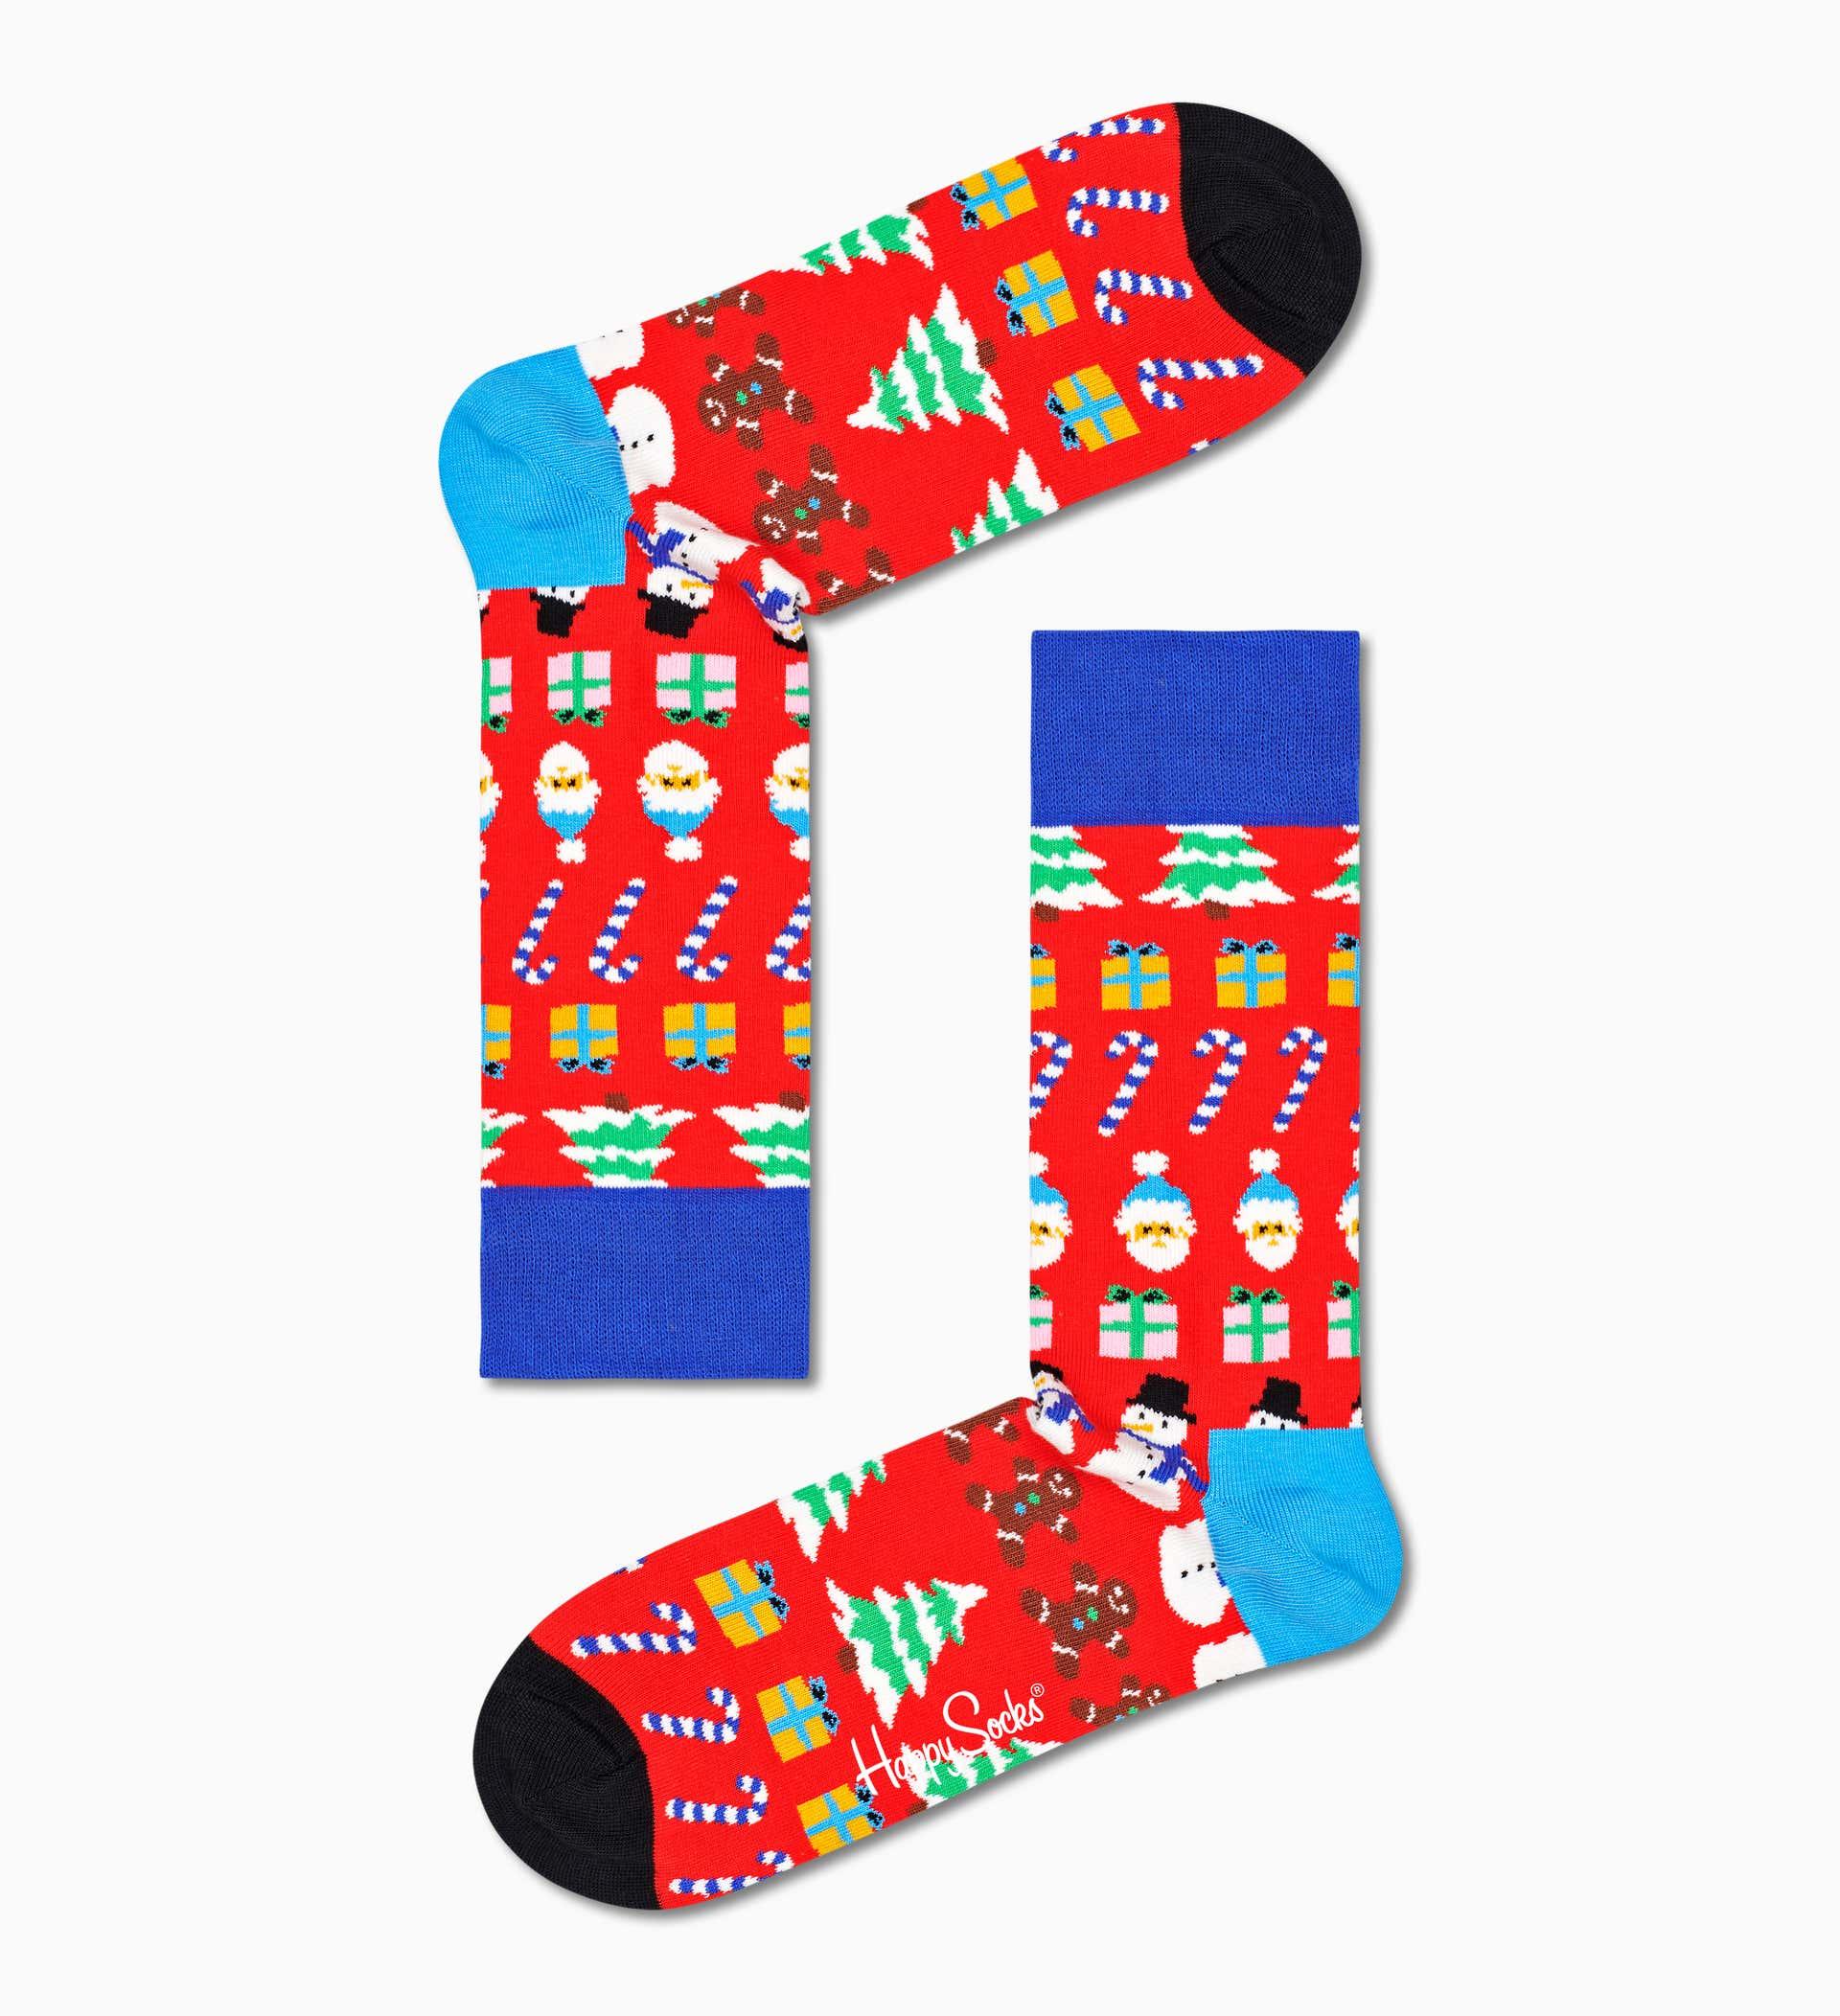 Happy Socks All I Want For Christmas Sock - No Generation